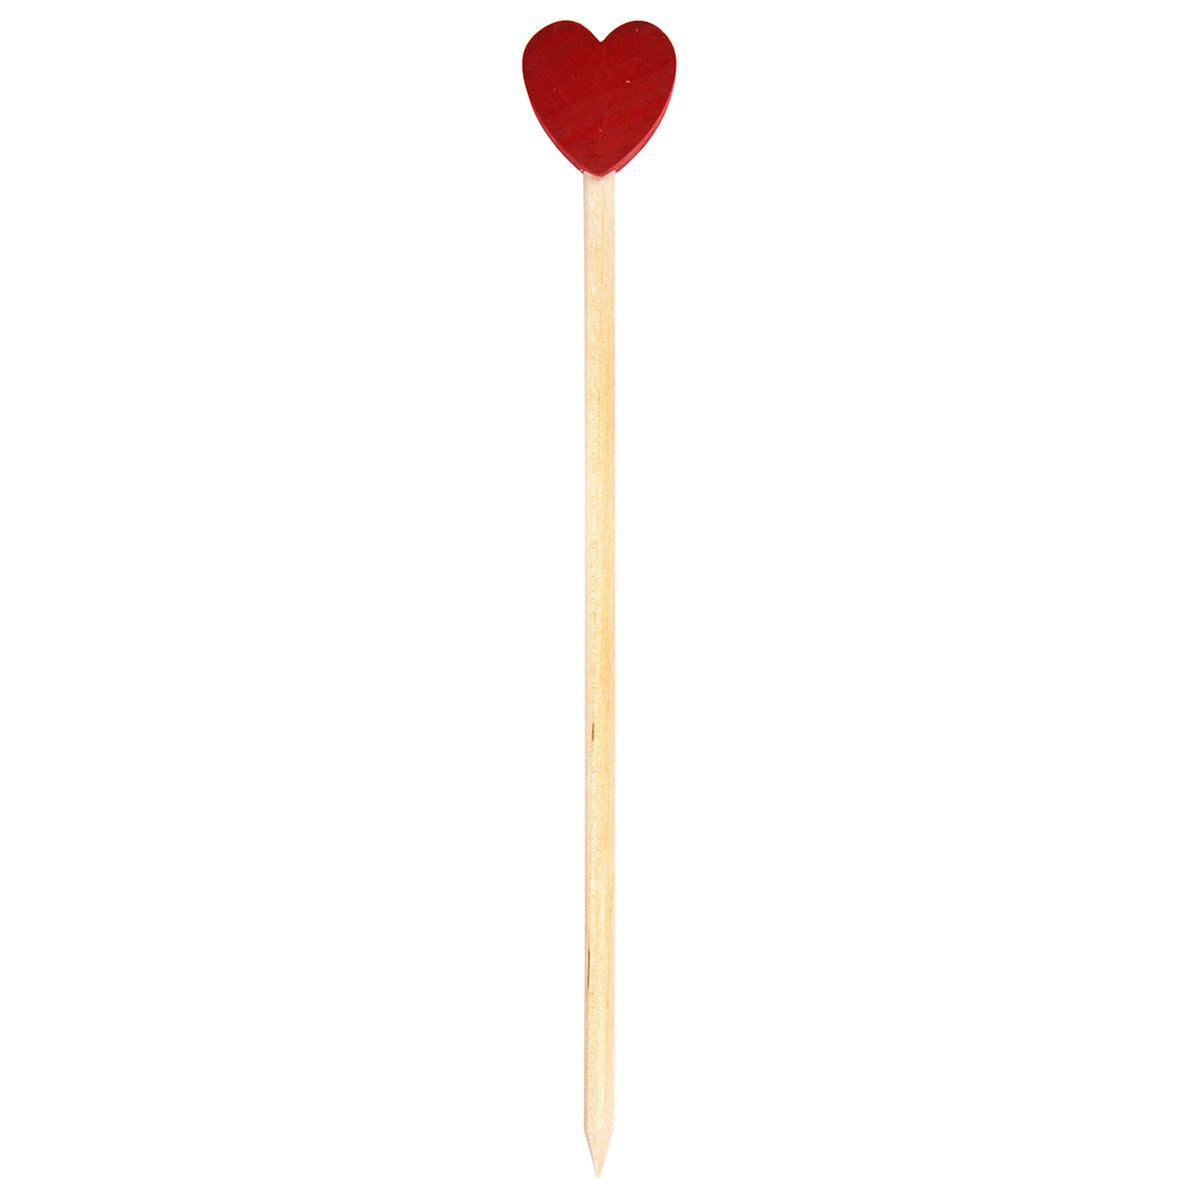 Sydän decoration stick, red